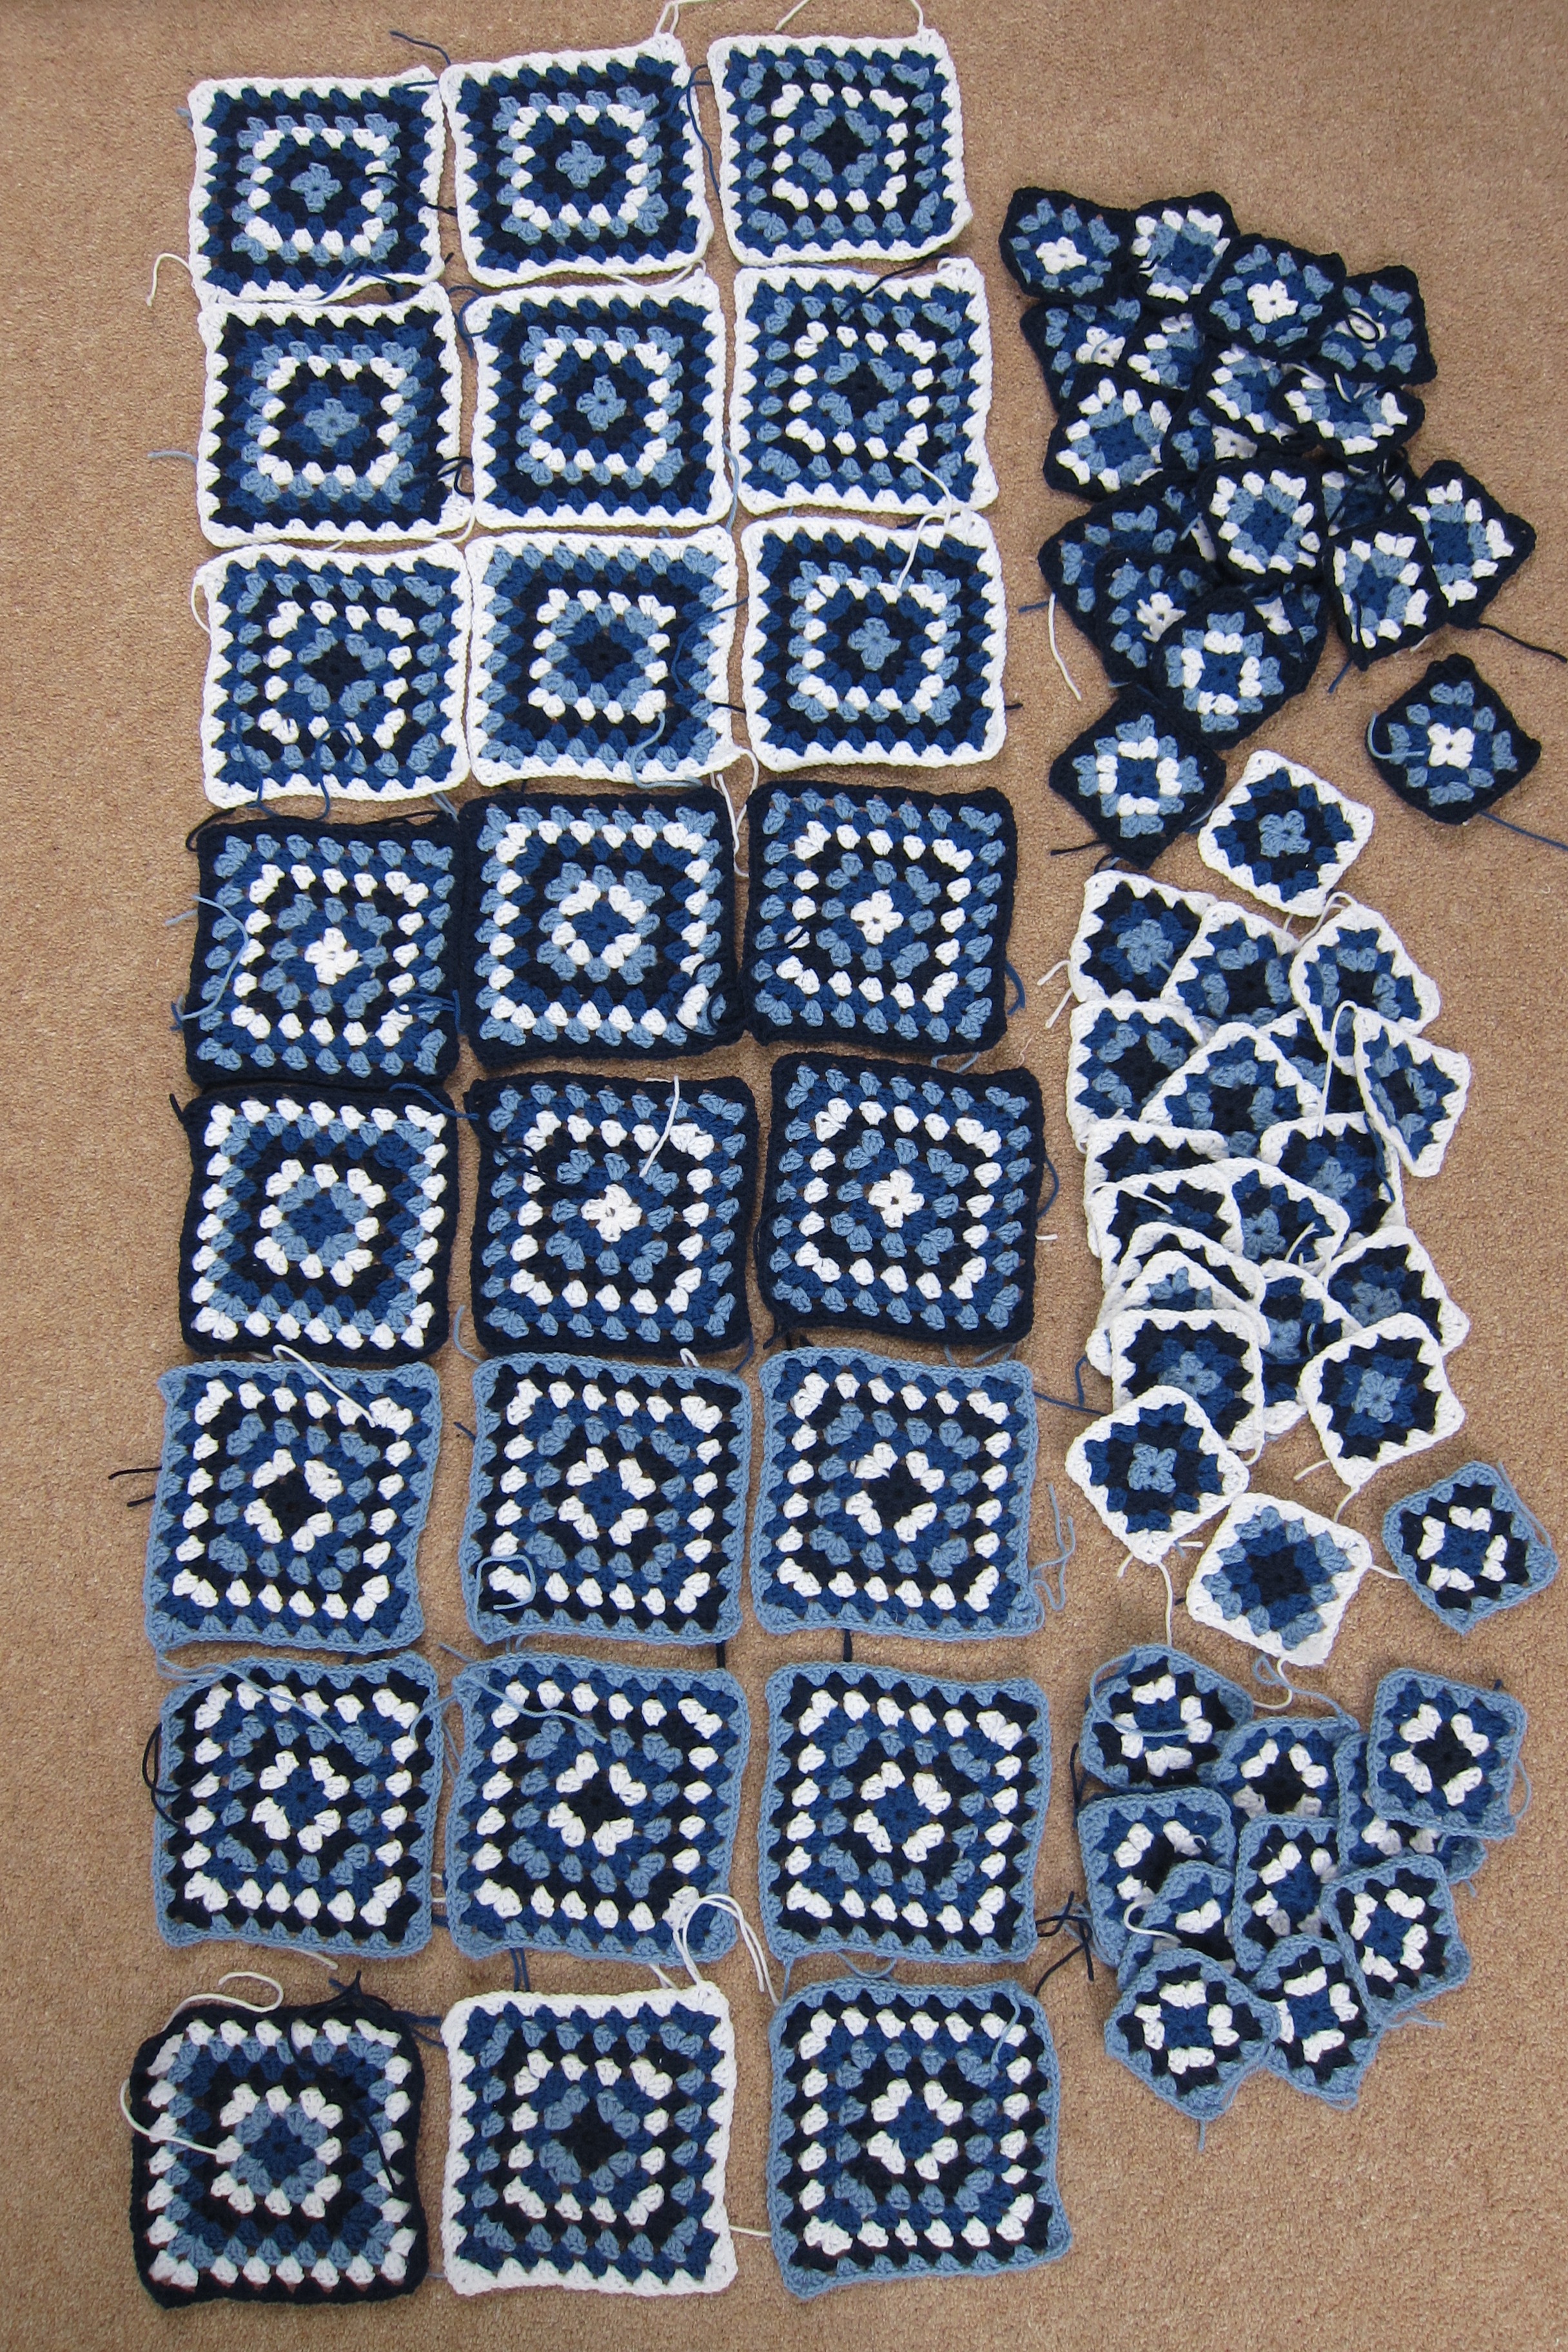 Crochet blanket progress